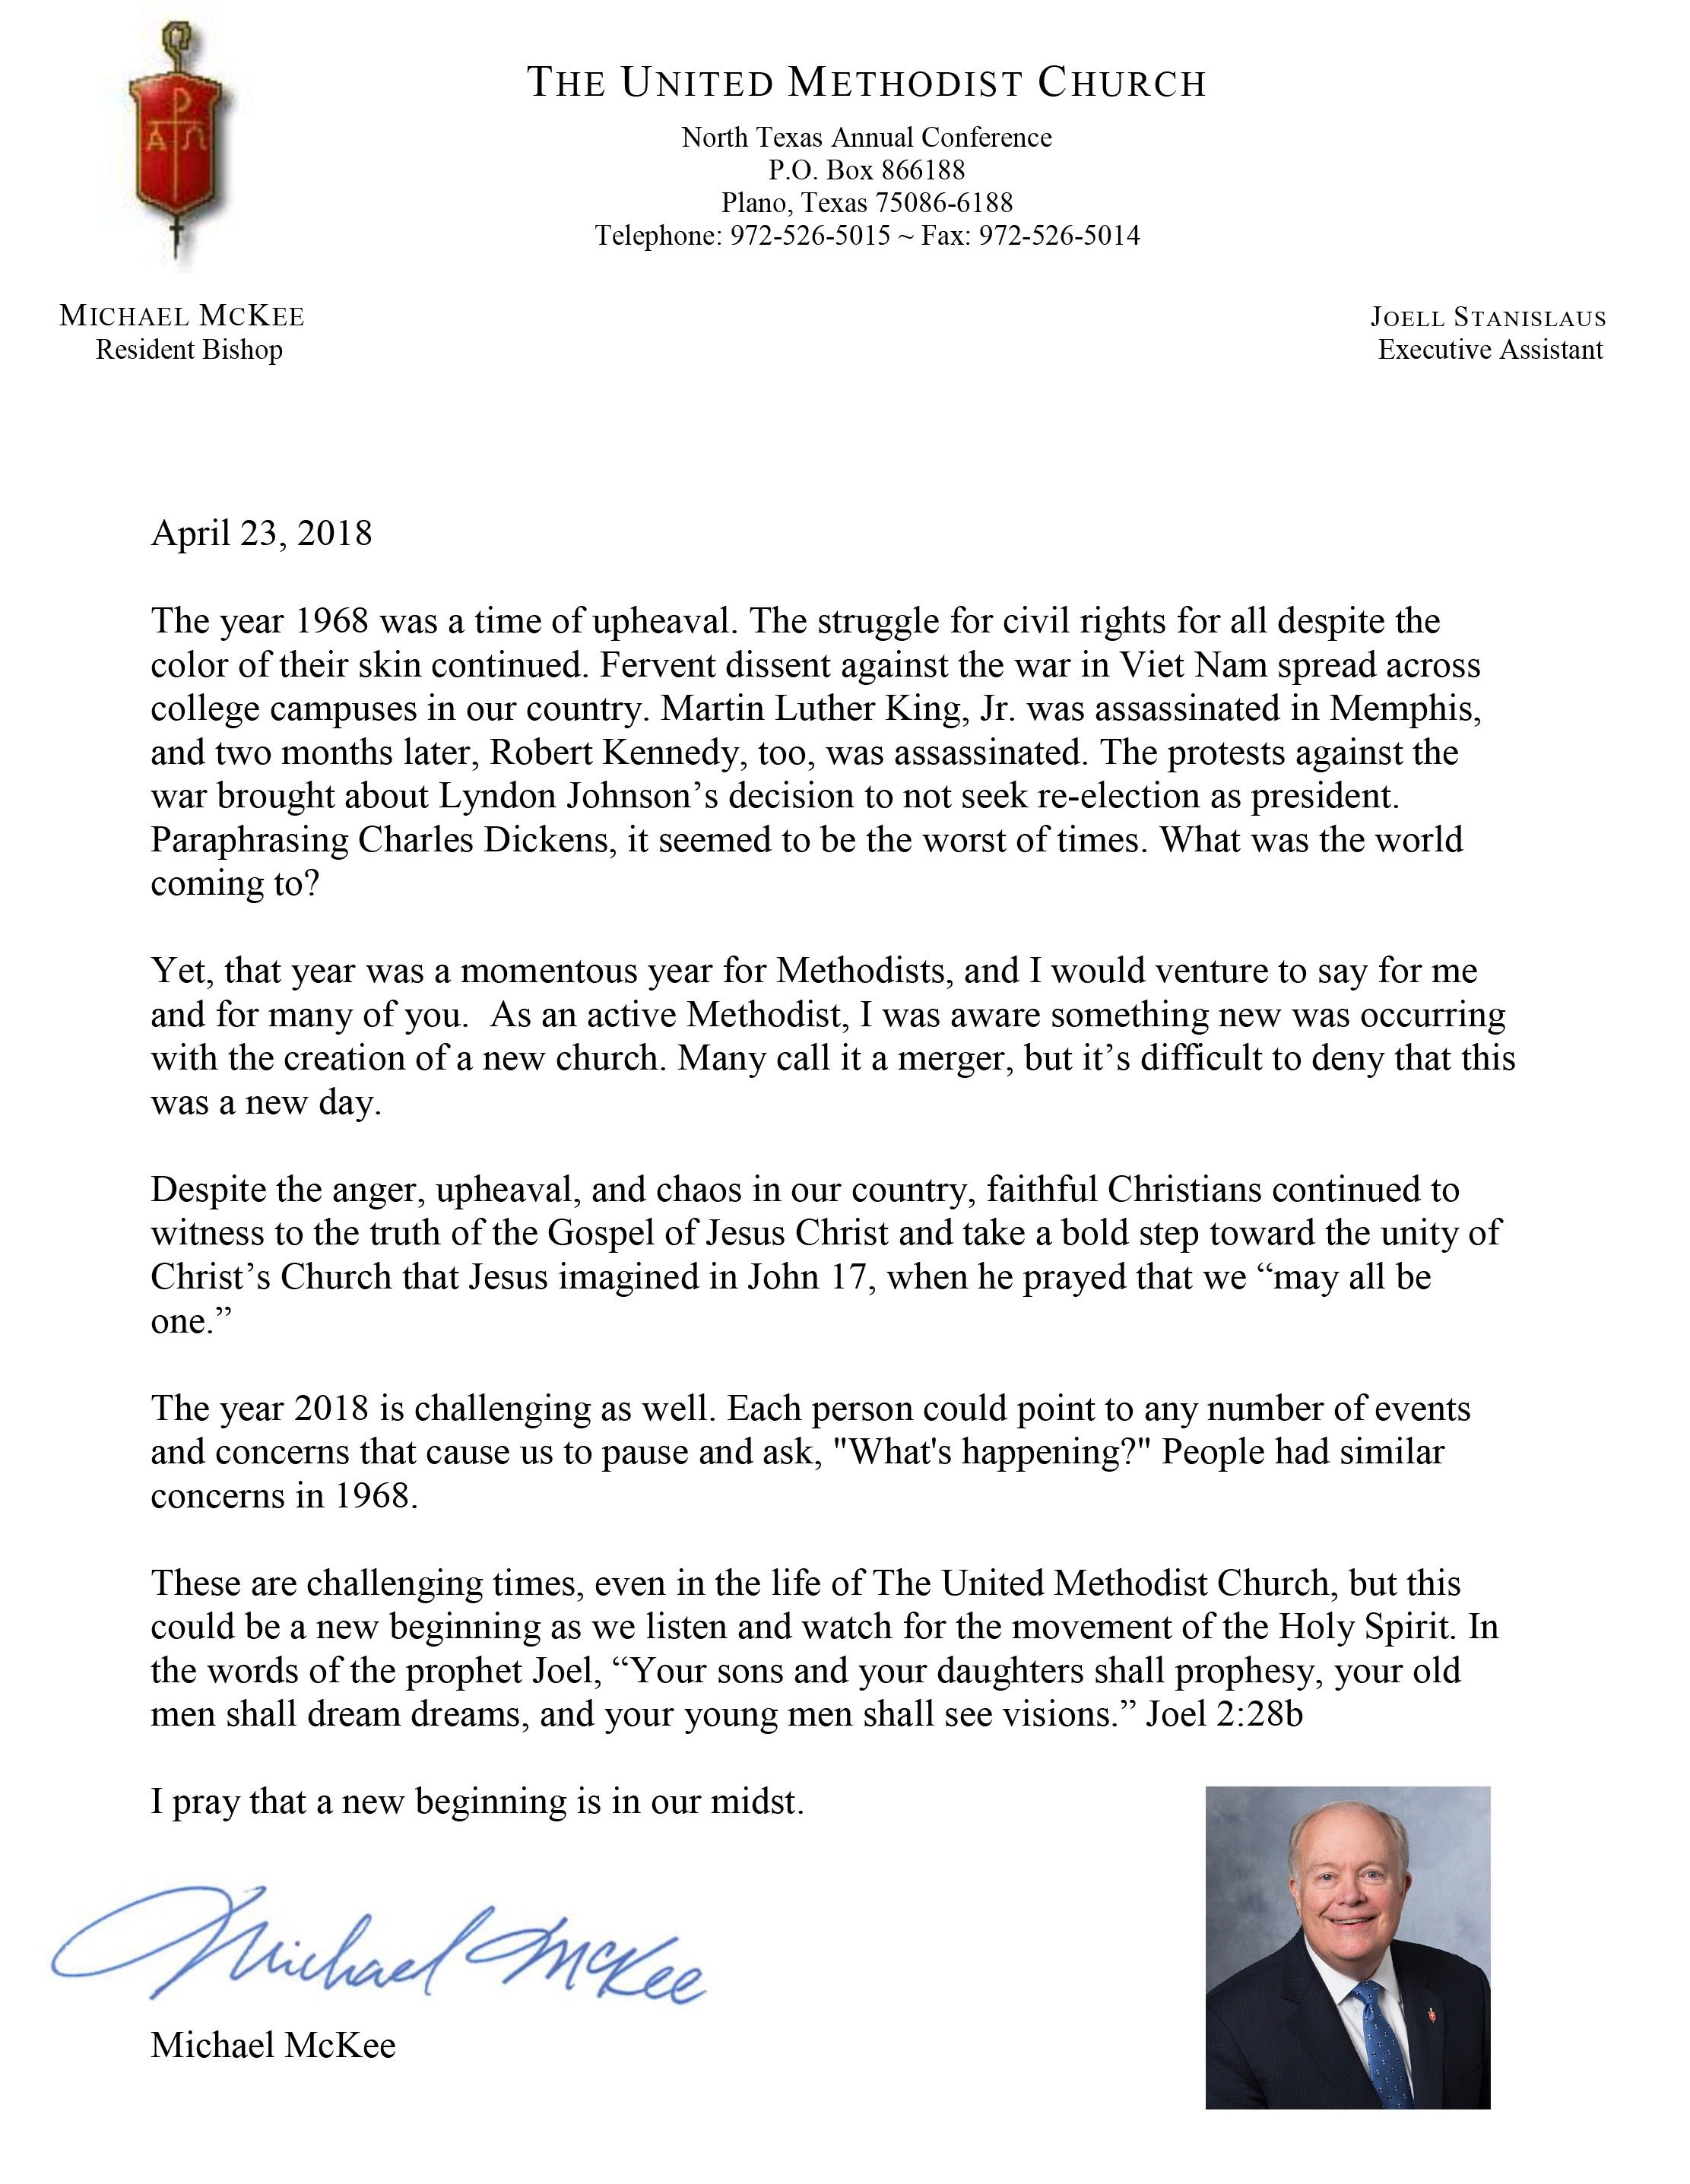 Bishop's letter from April 23, 2018